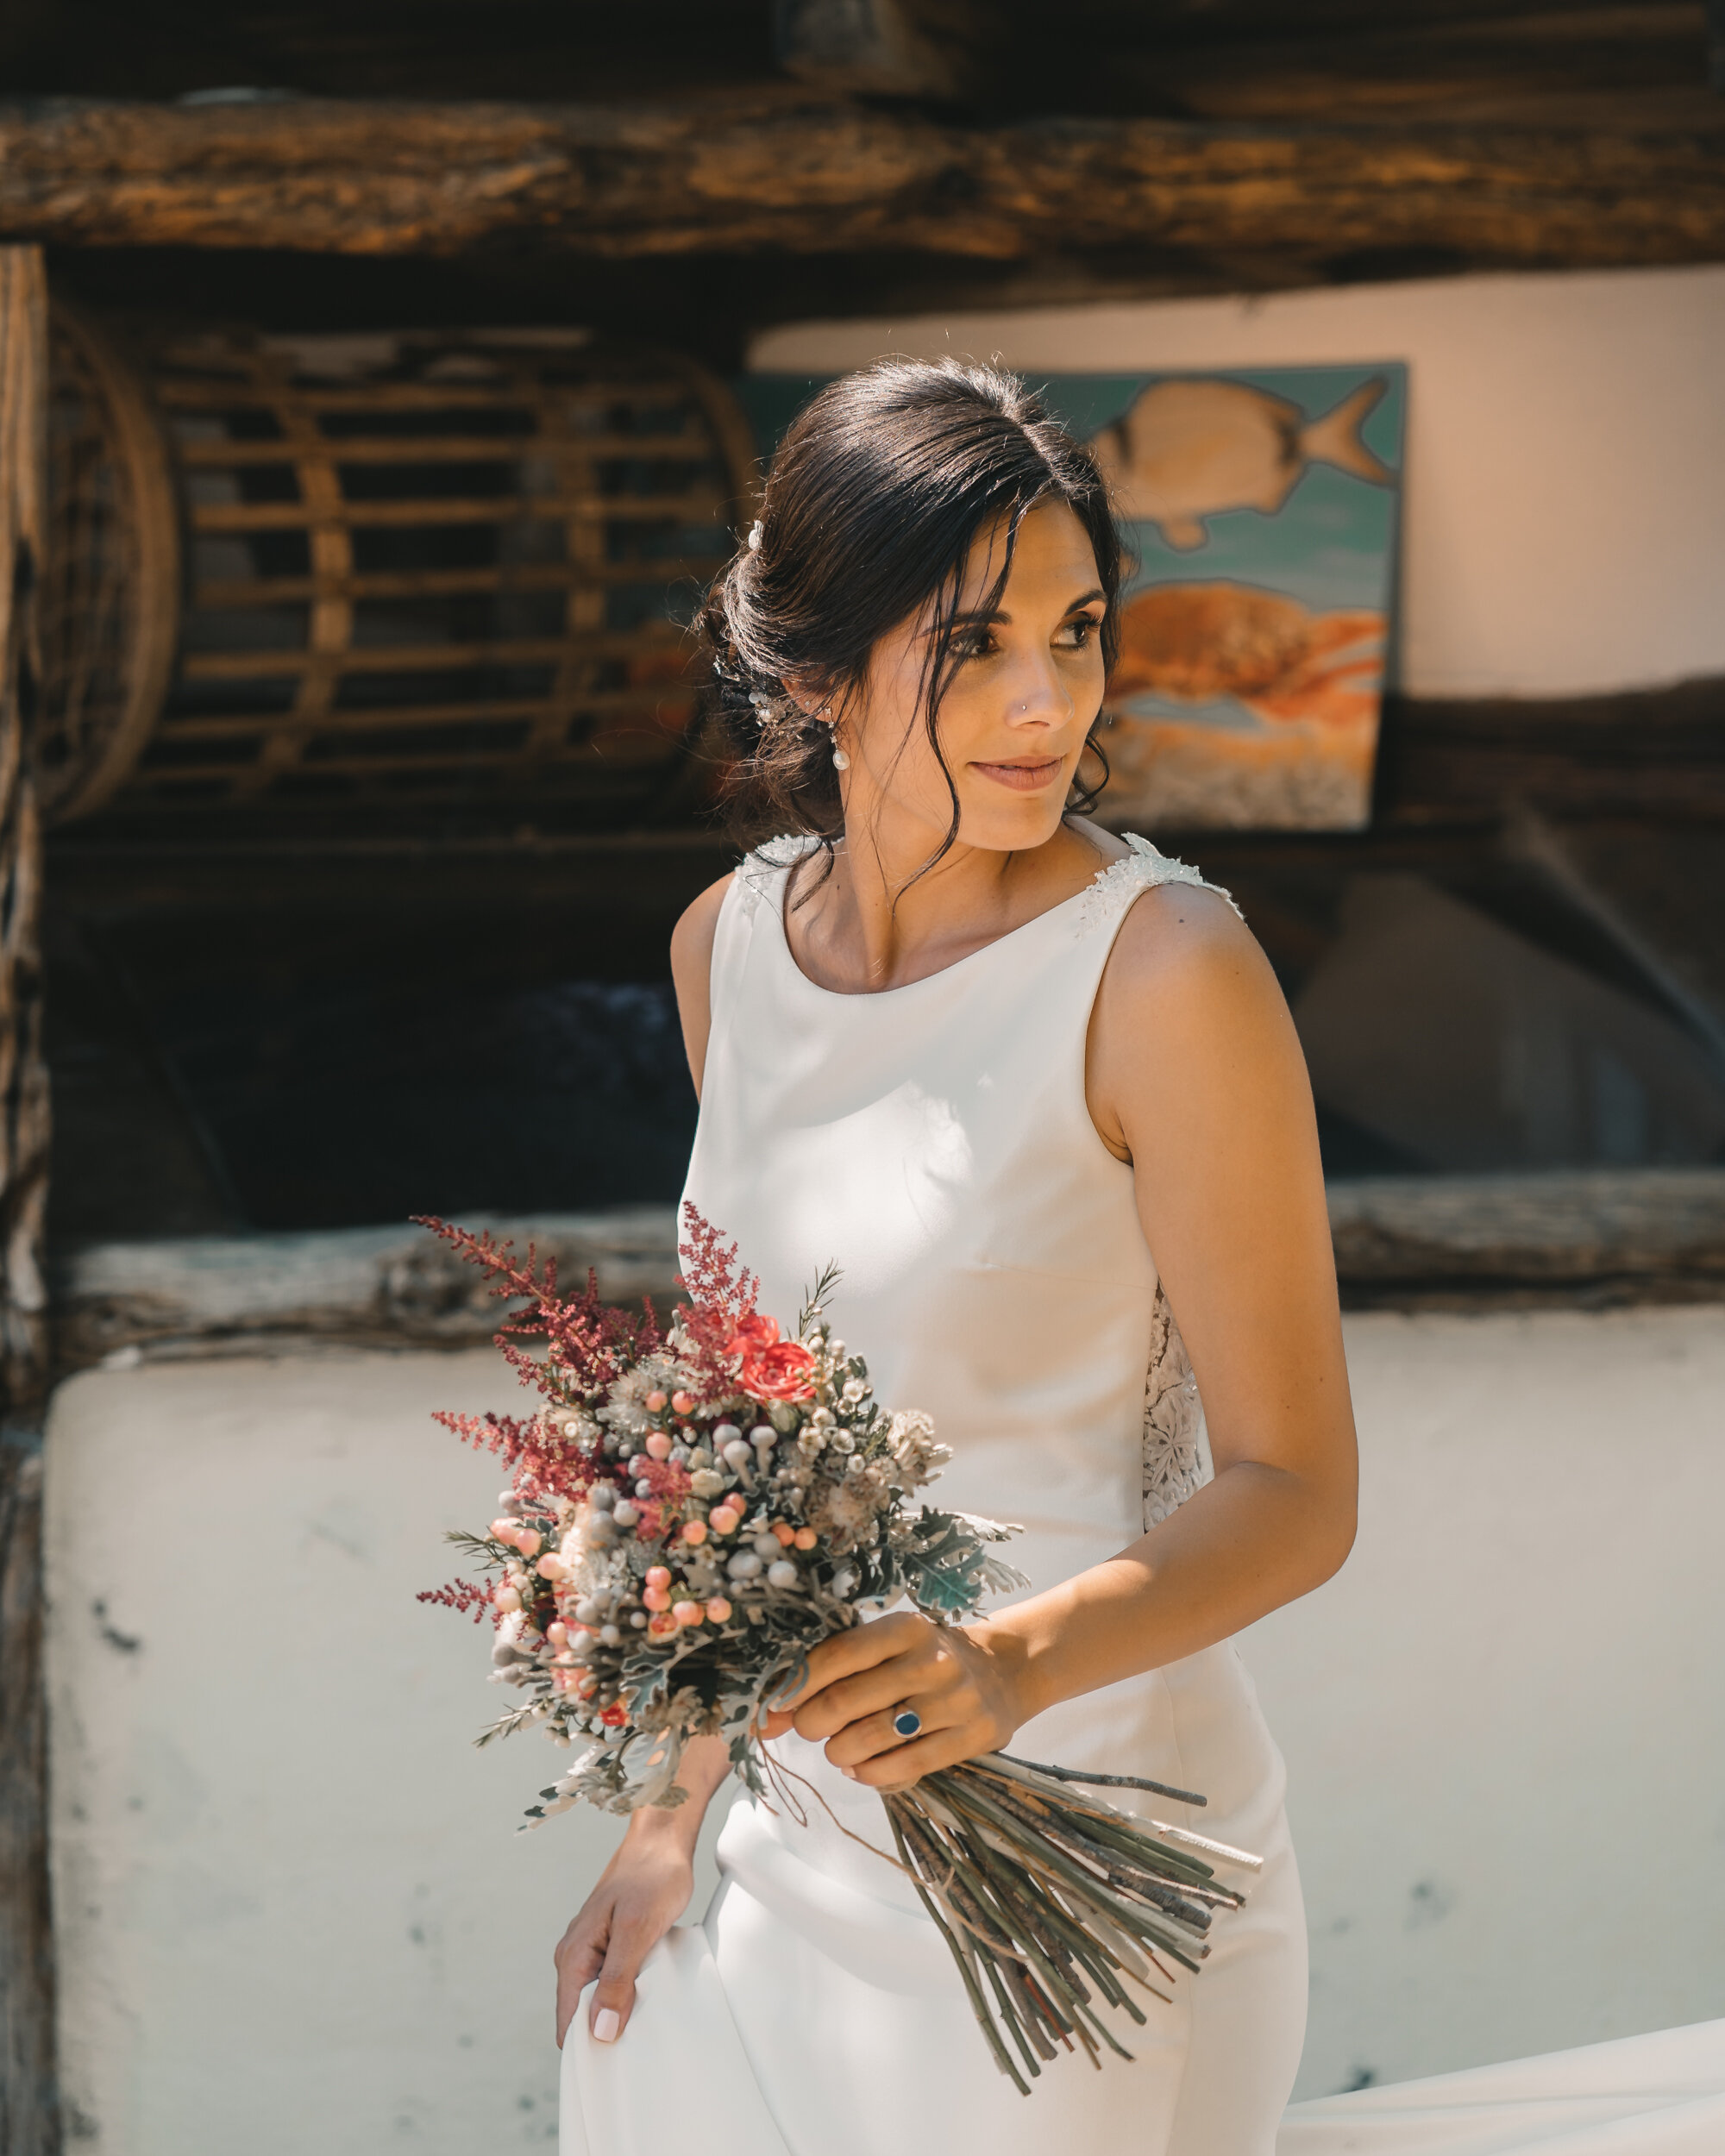 Naiara-Coco-Wedding-2019-Sam-OetikerA7301186.jpg